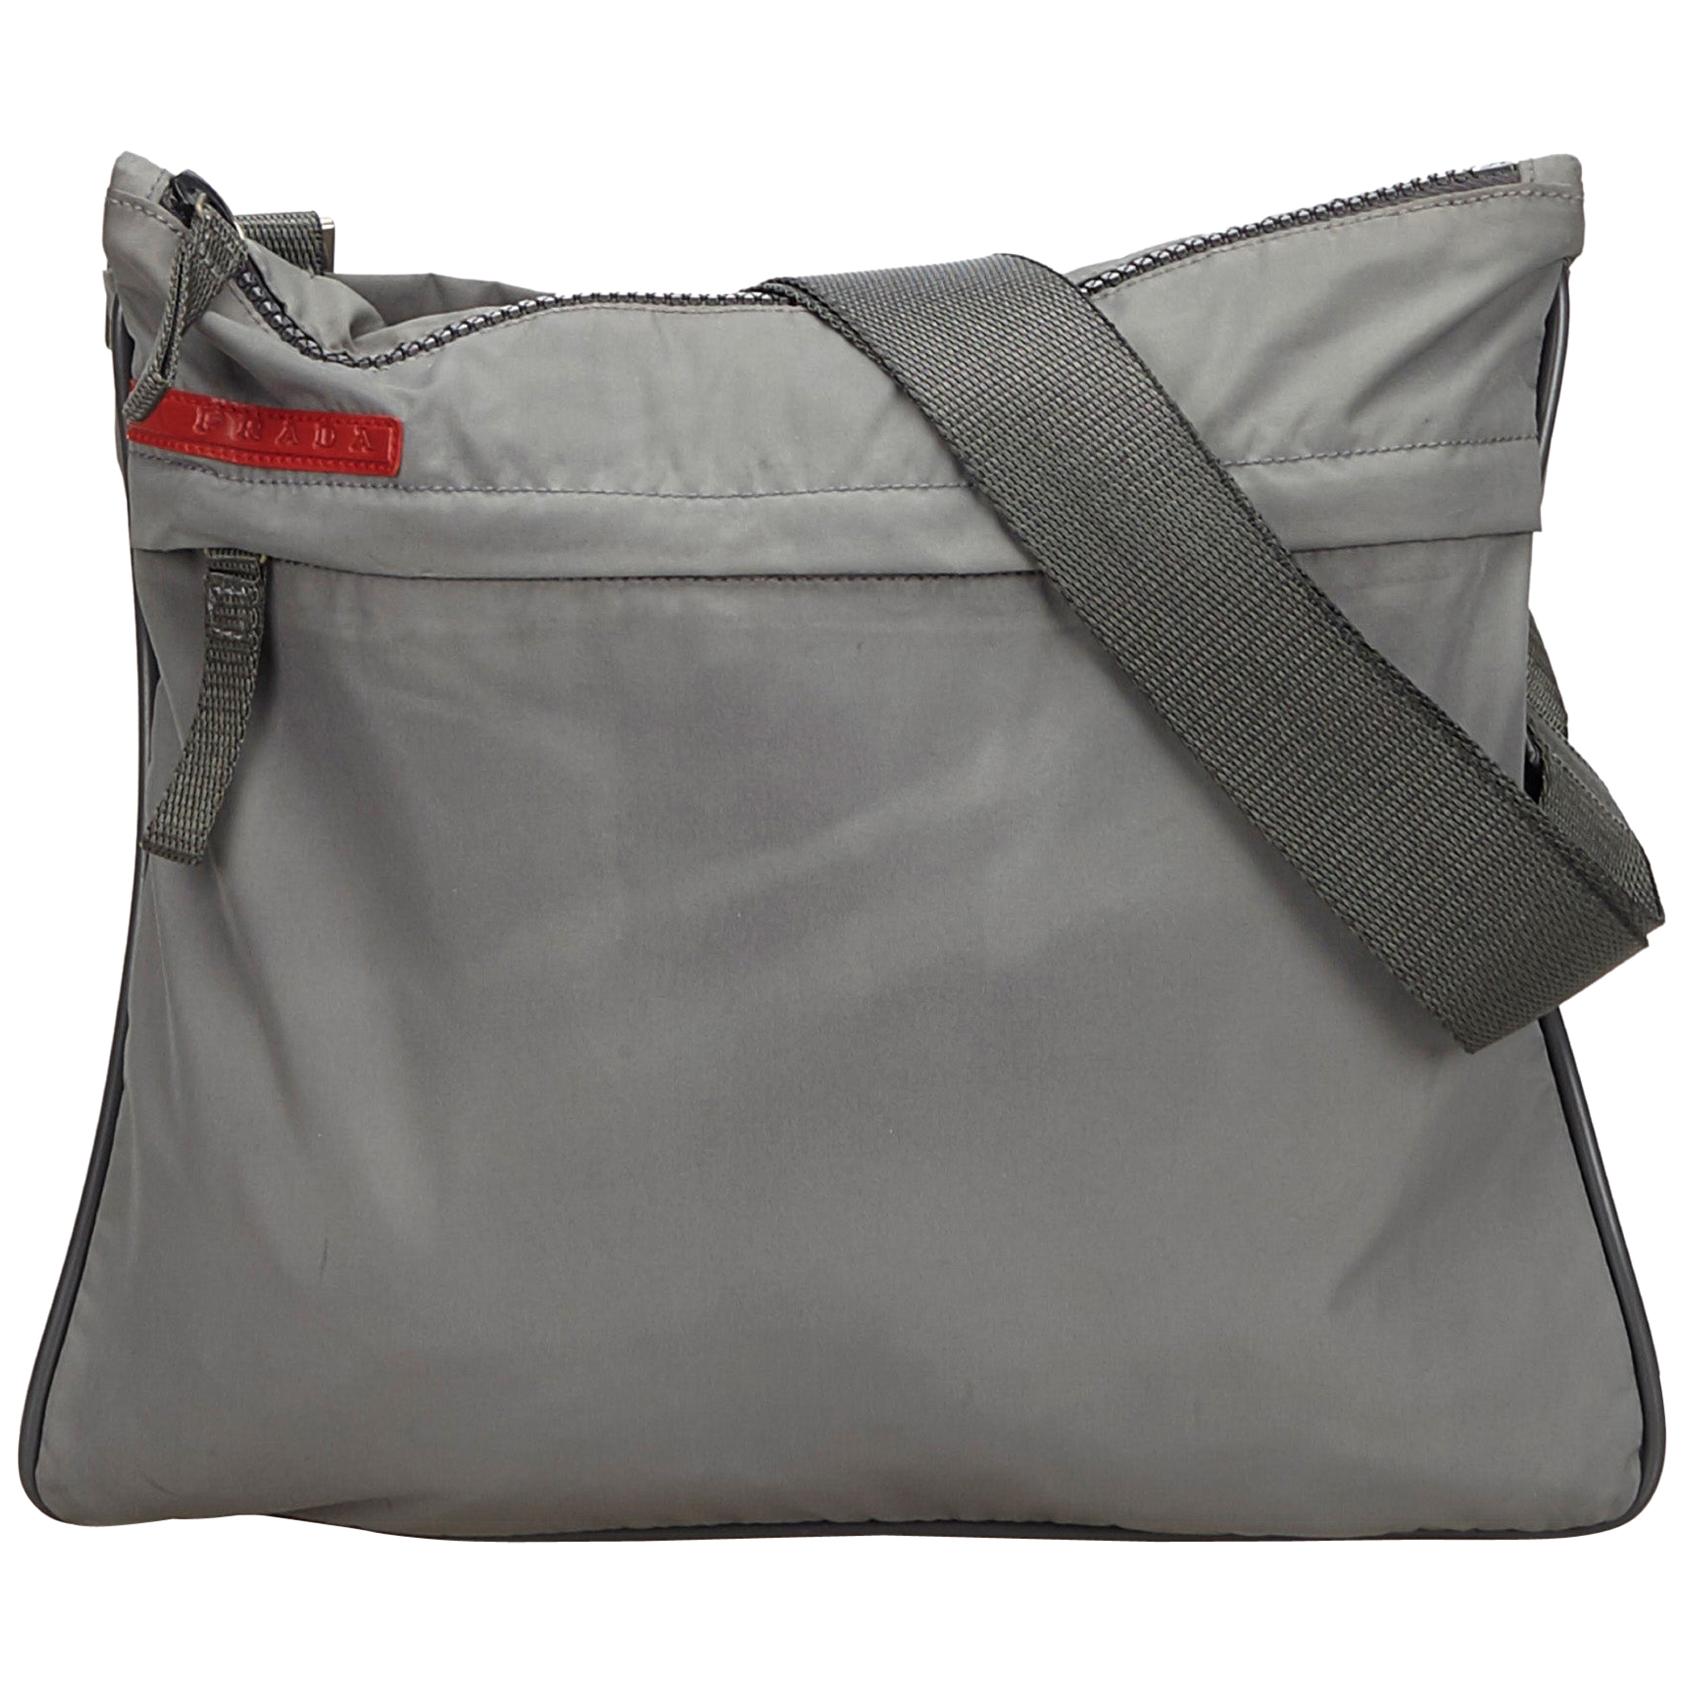 Vintage Authentic Prada Gray Nylon Fabric Sports Crossbody Bag Italy MEDIUM 